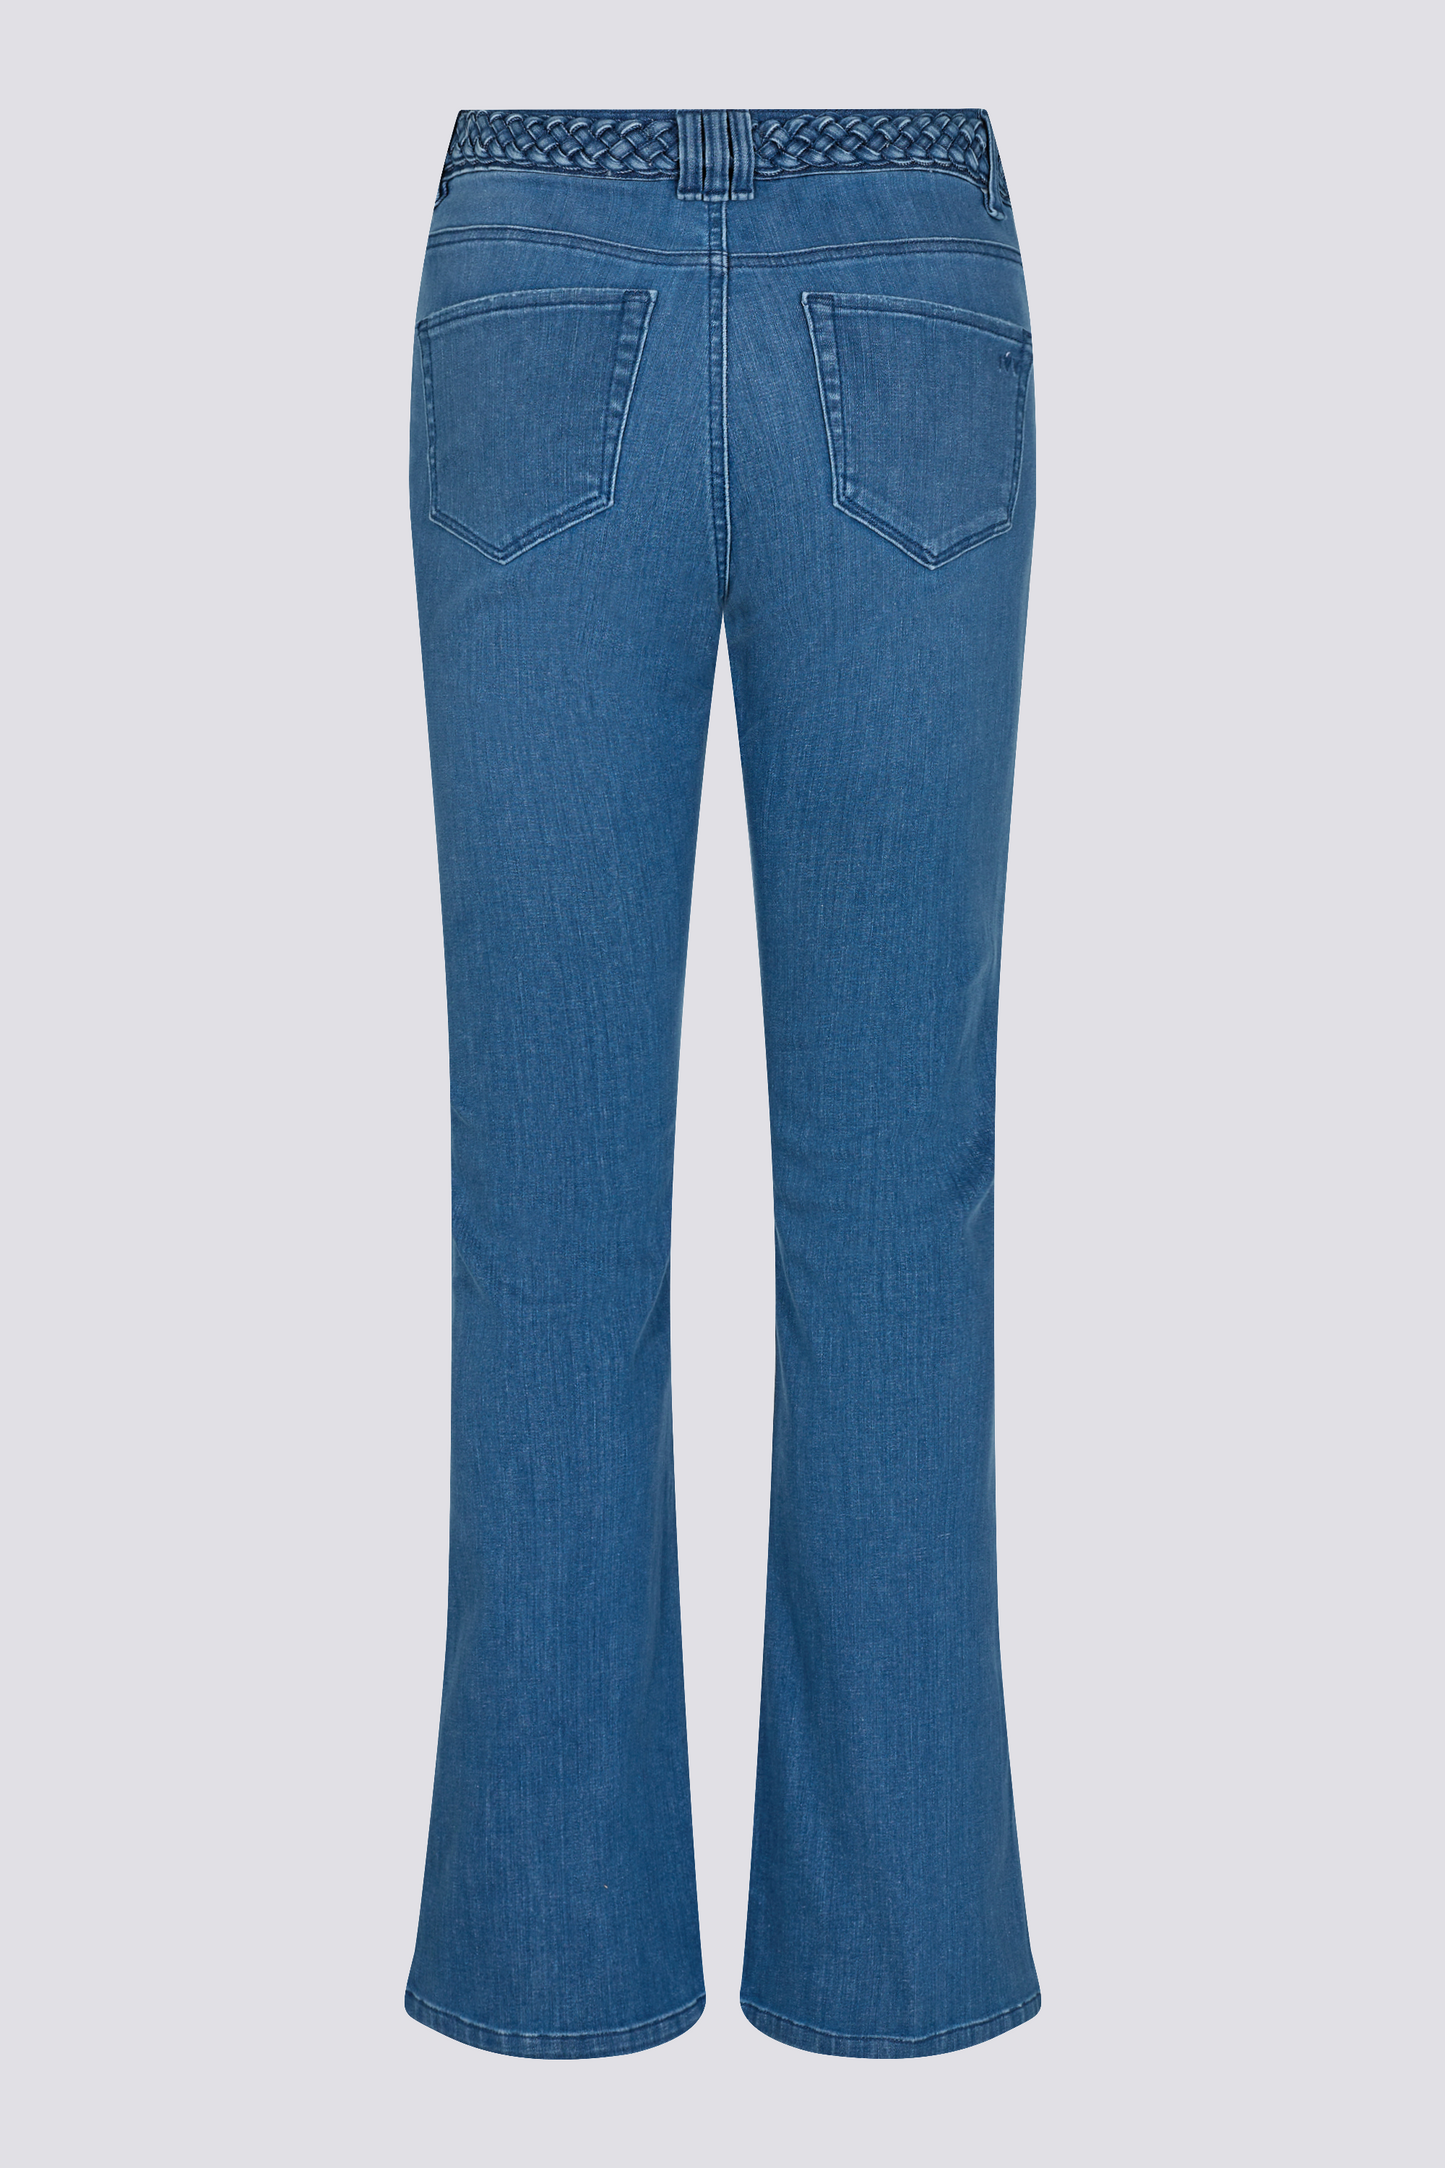 IVY Copenhagen IVY-Tara 70's Jeans Wash Dark Lecco Jeans & Pants